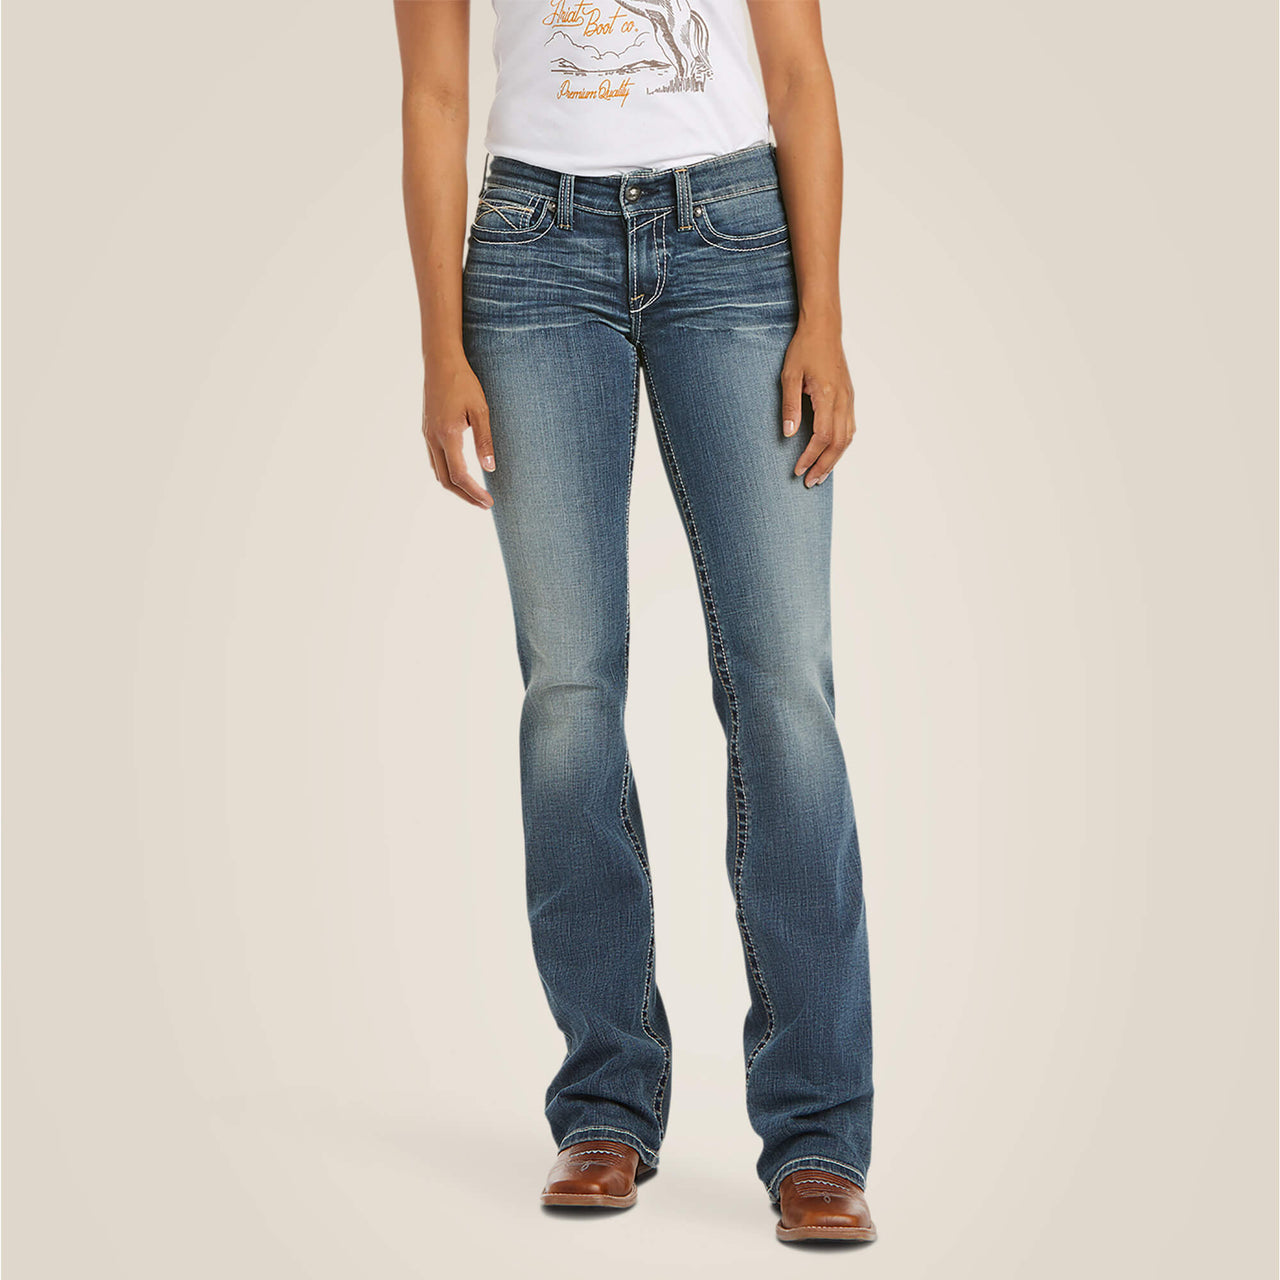 Radish Harlan High Waist Ariat Jeans For Women For Women Thickened